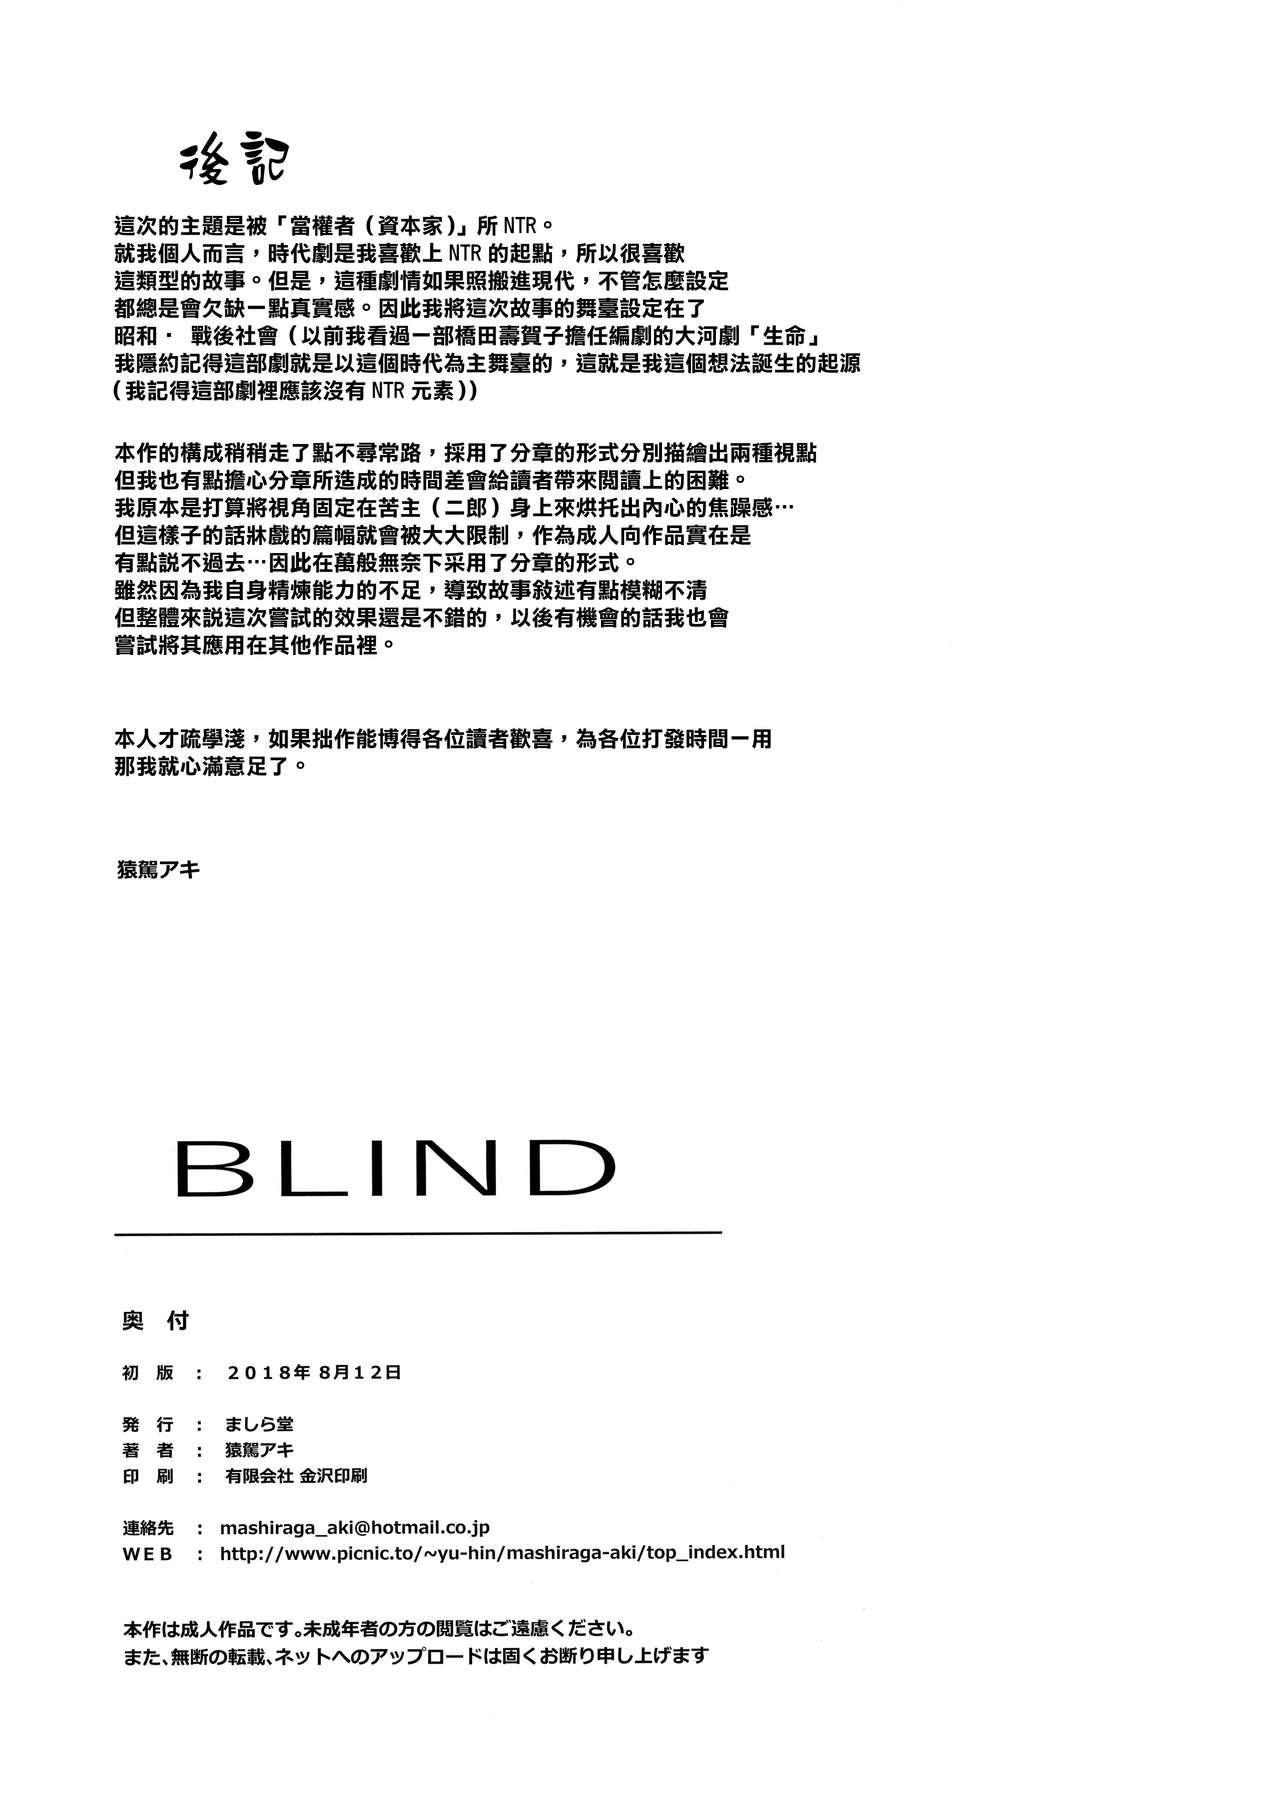 Blind 40